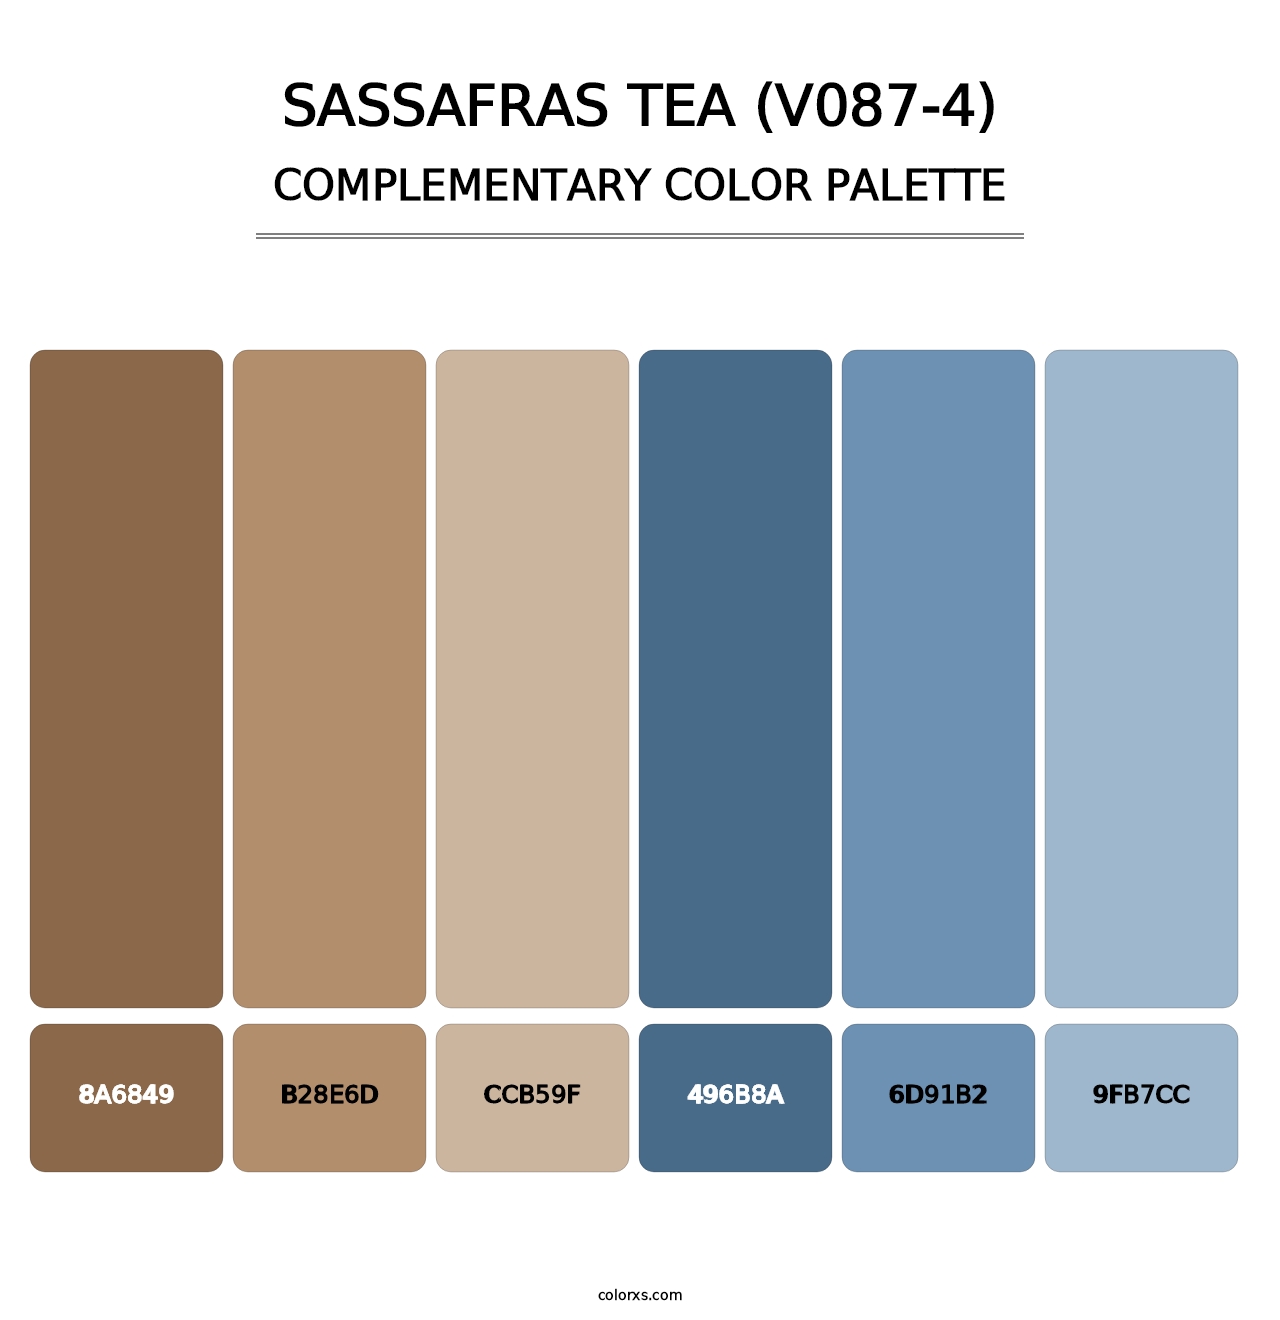 Sassafras Tea (V087-4) - Complementary Color Palette